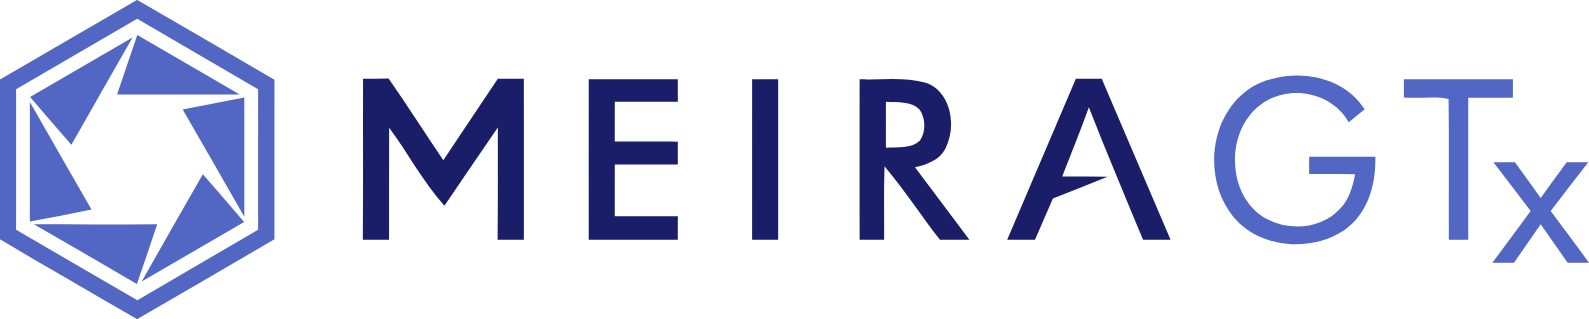 MeiraGTx logo large (transparent PNG)